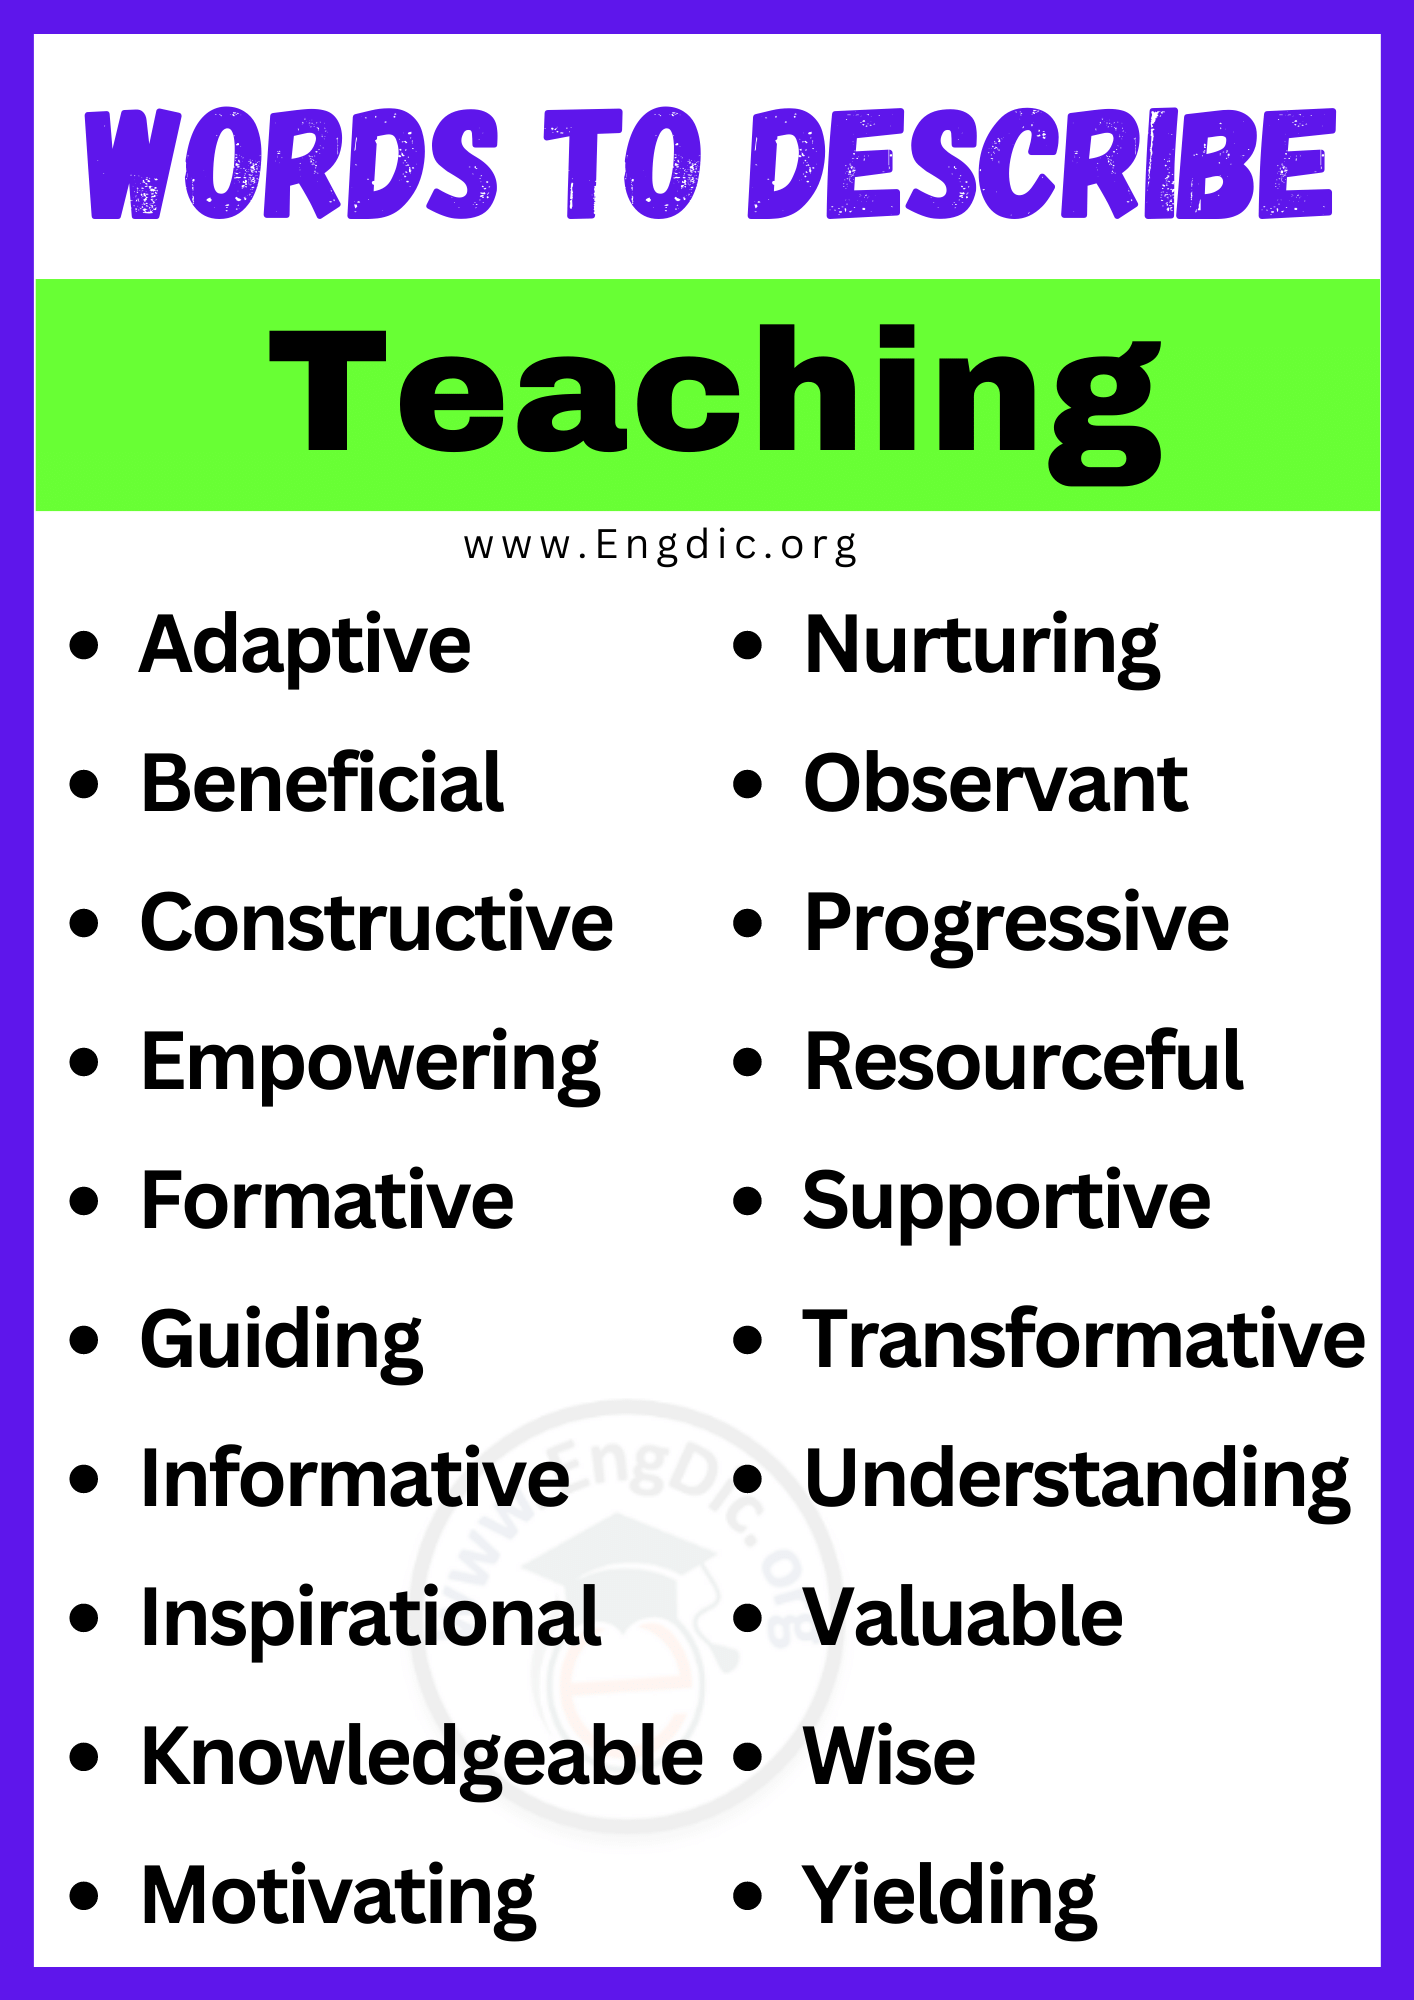 Words to Describe Teaching